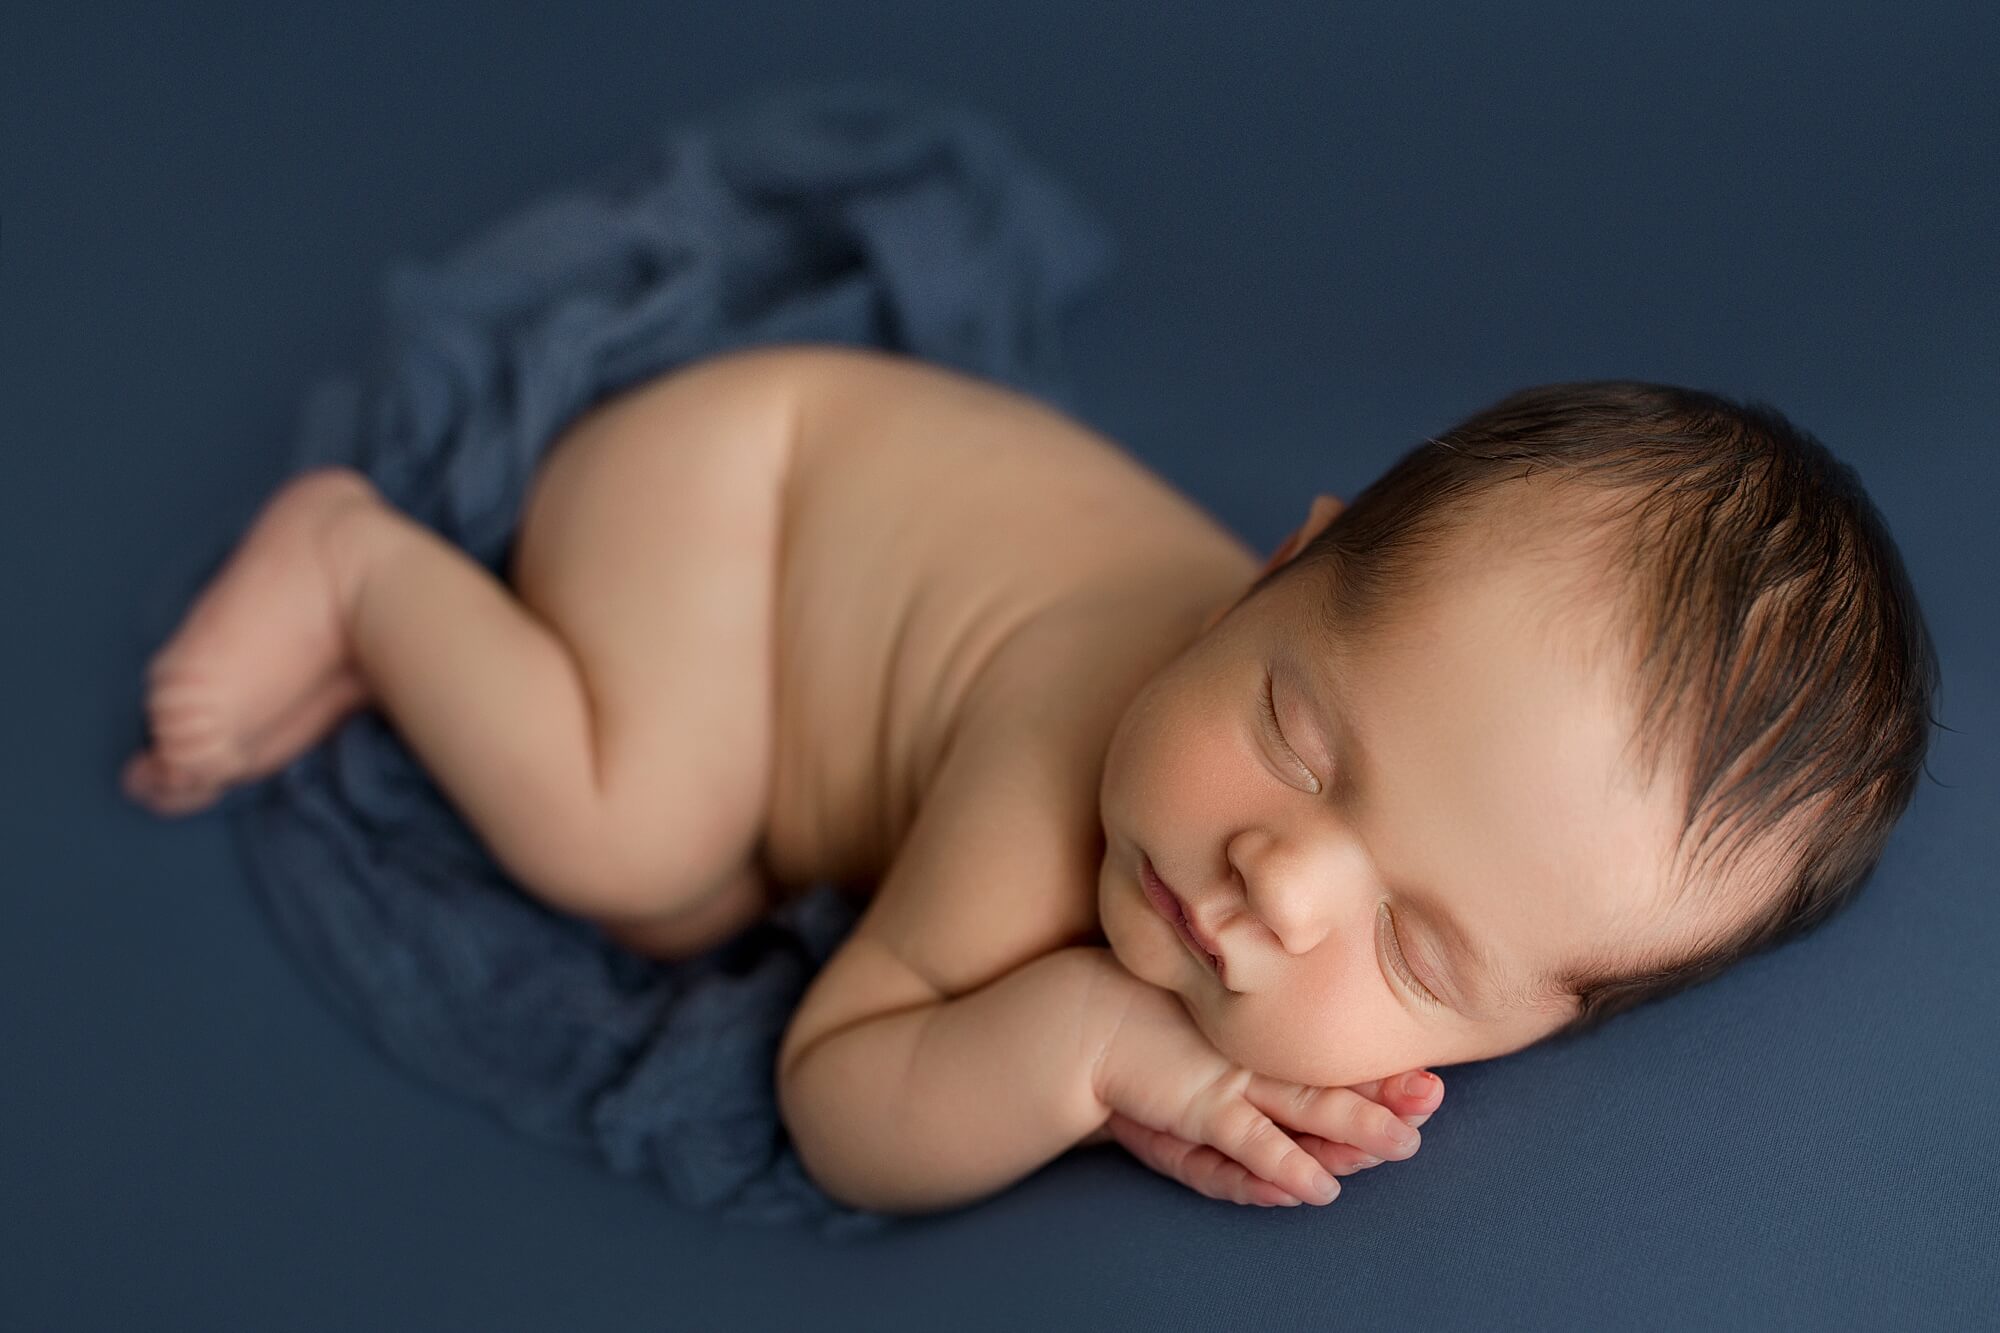 seattle area newborn photographer - baby boy photo session